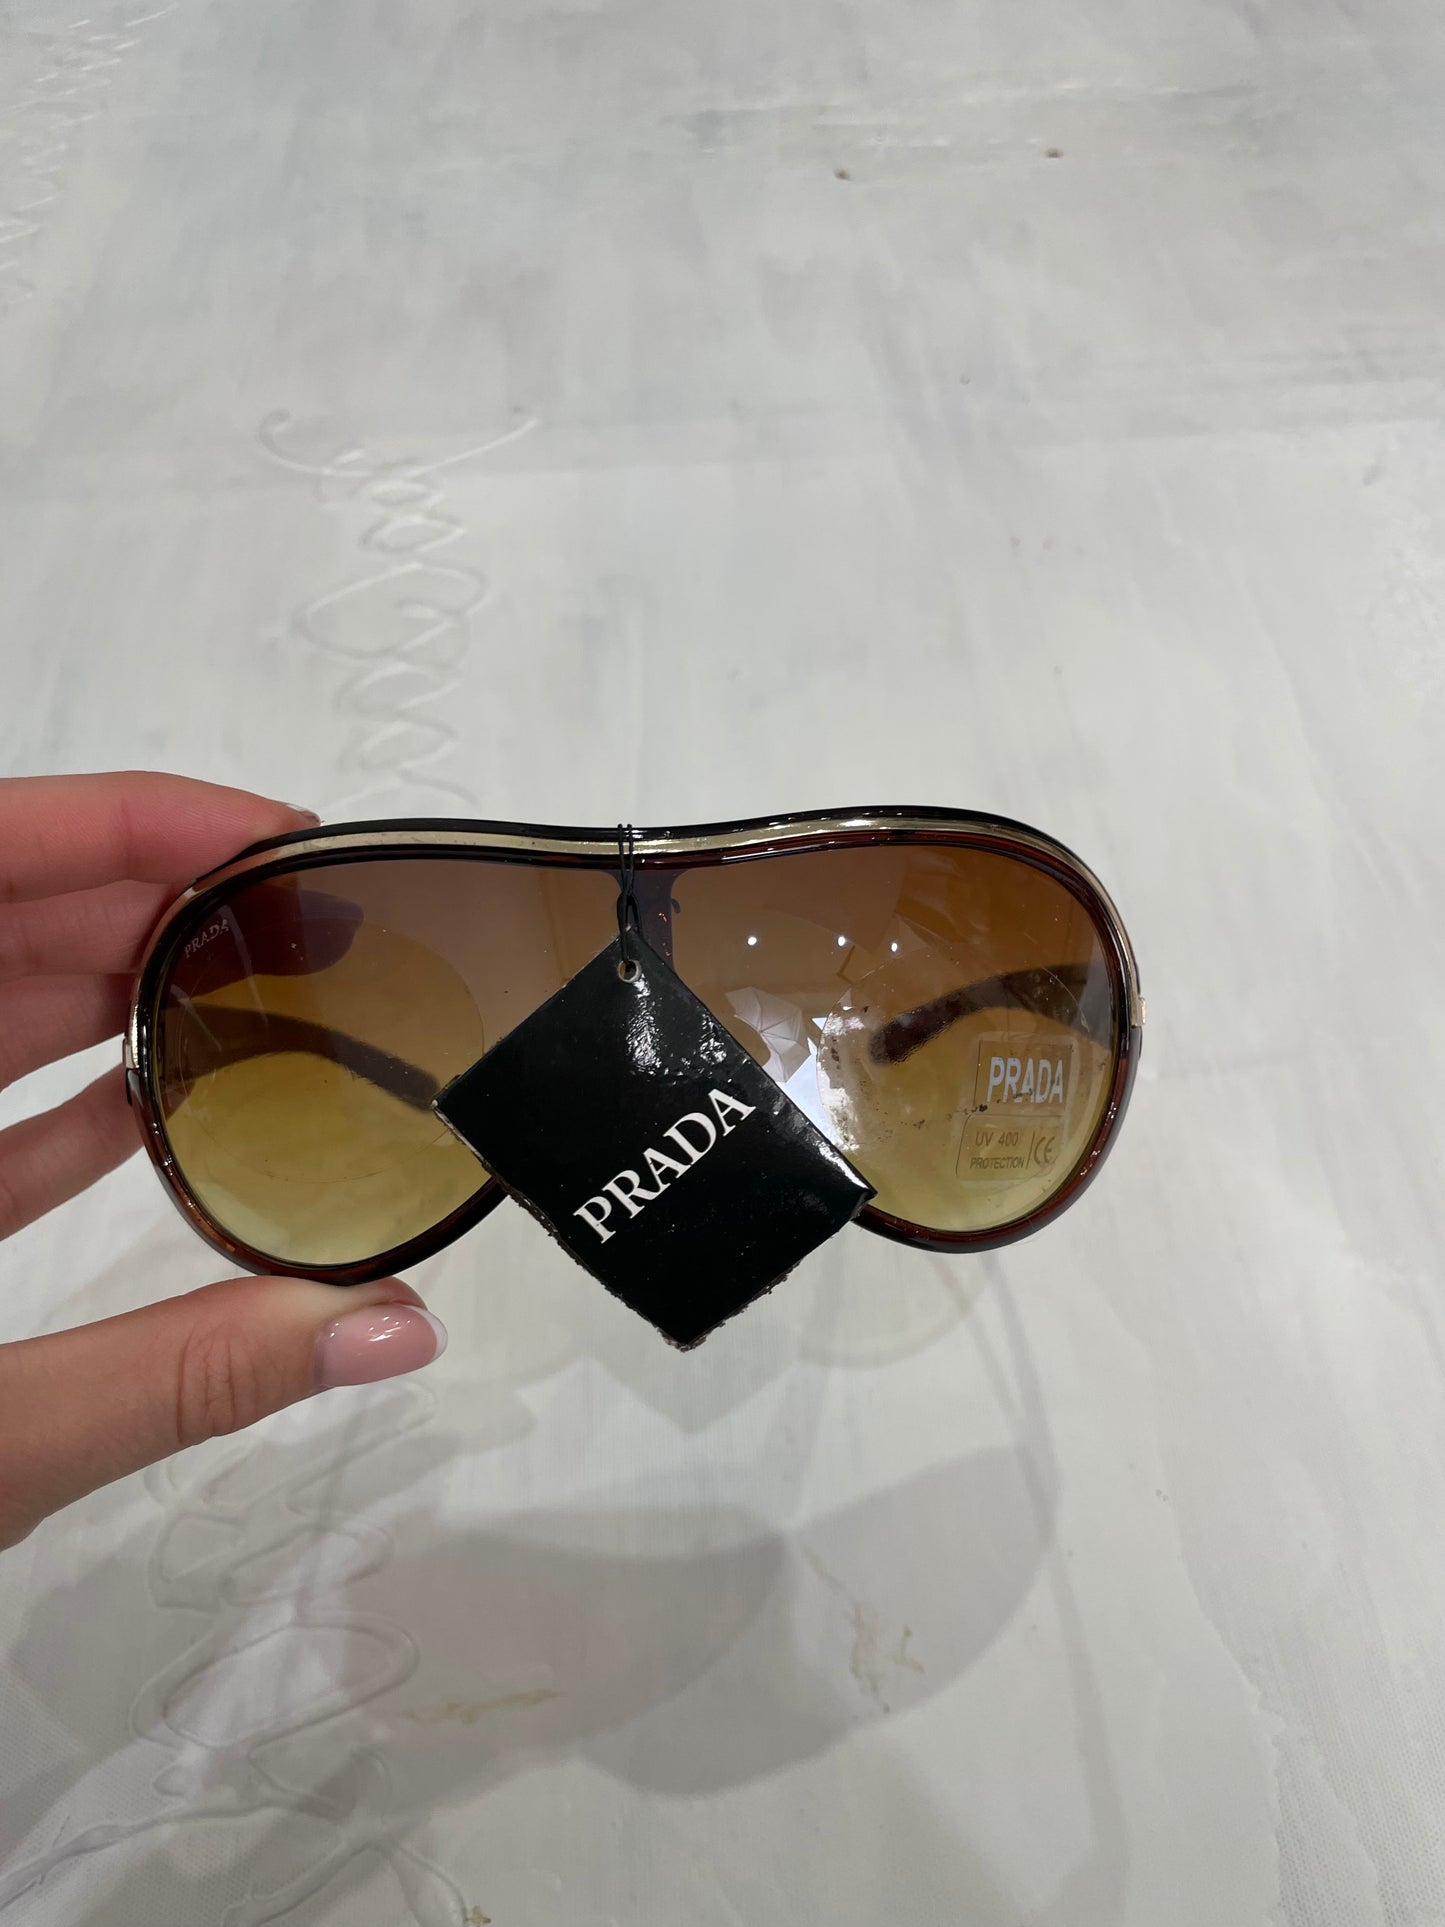 ADDISON RAE DROP | brown prada style shield sunglasses